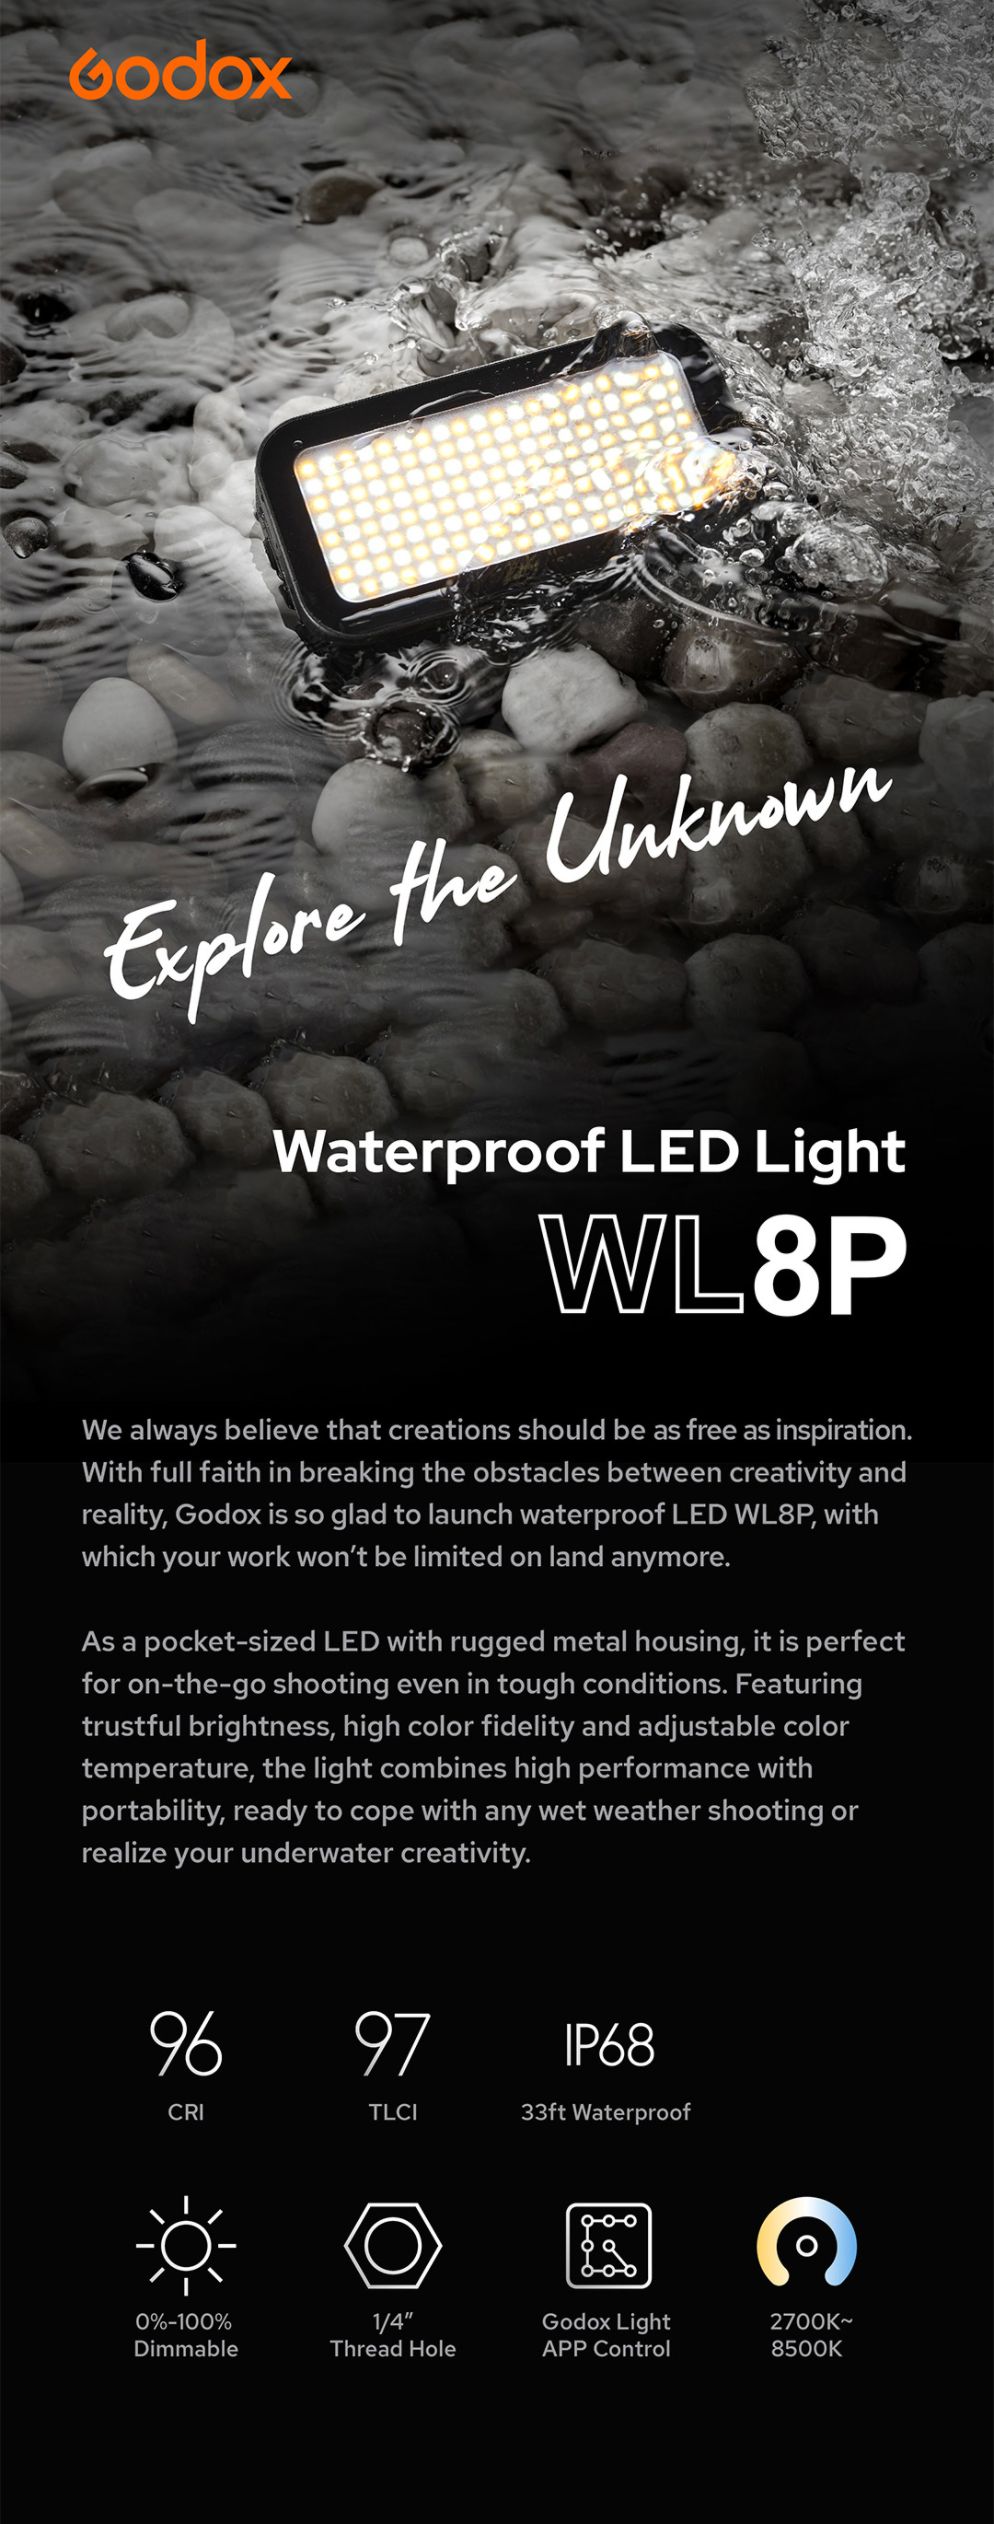 Godox Waterproof LED Light WL8P